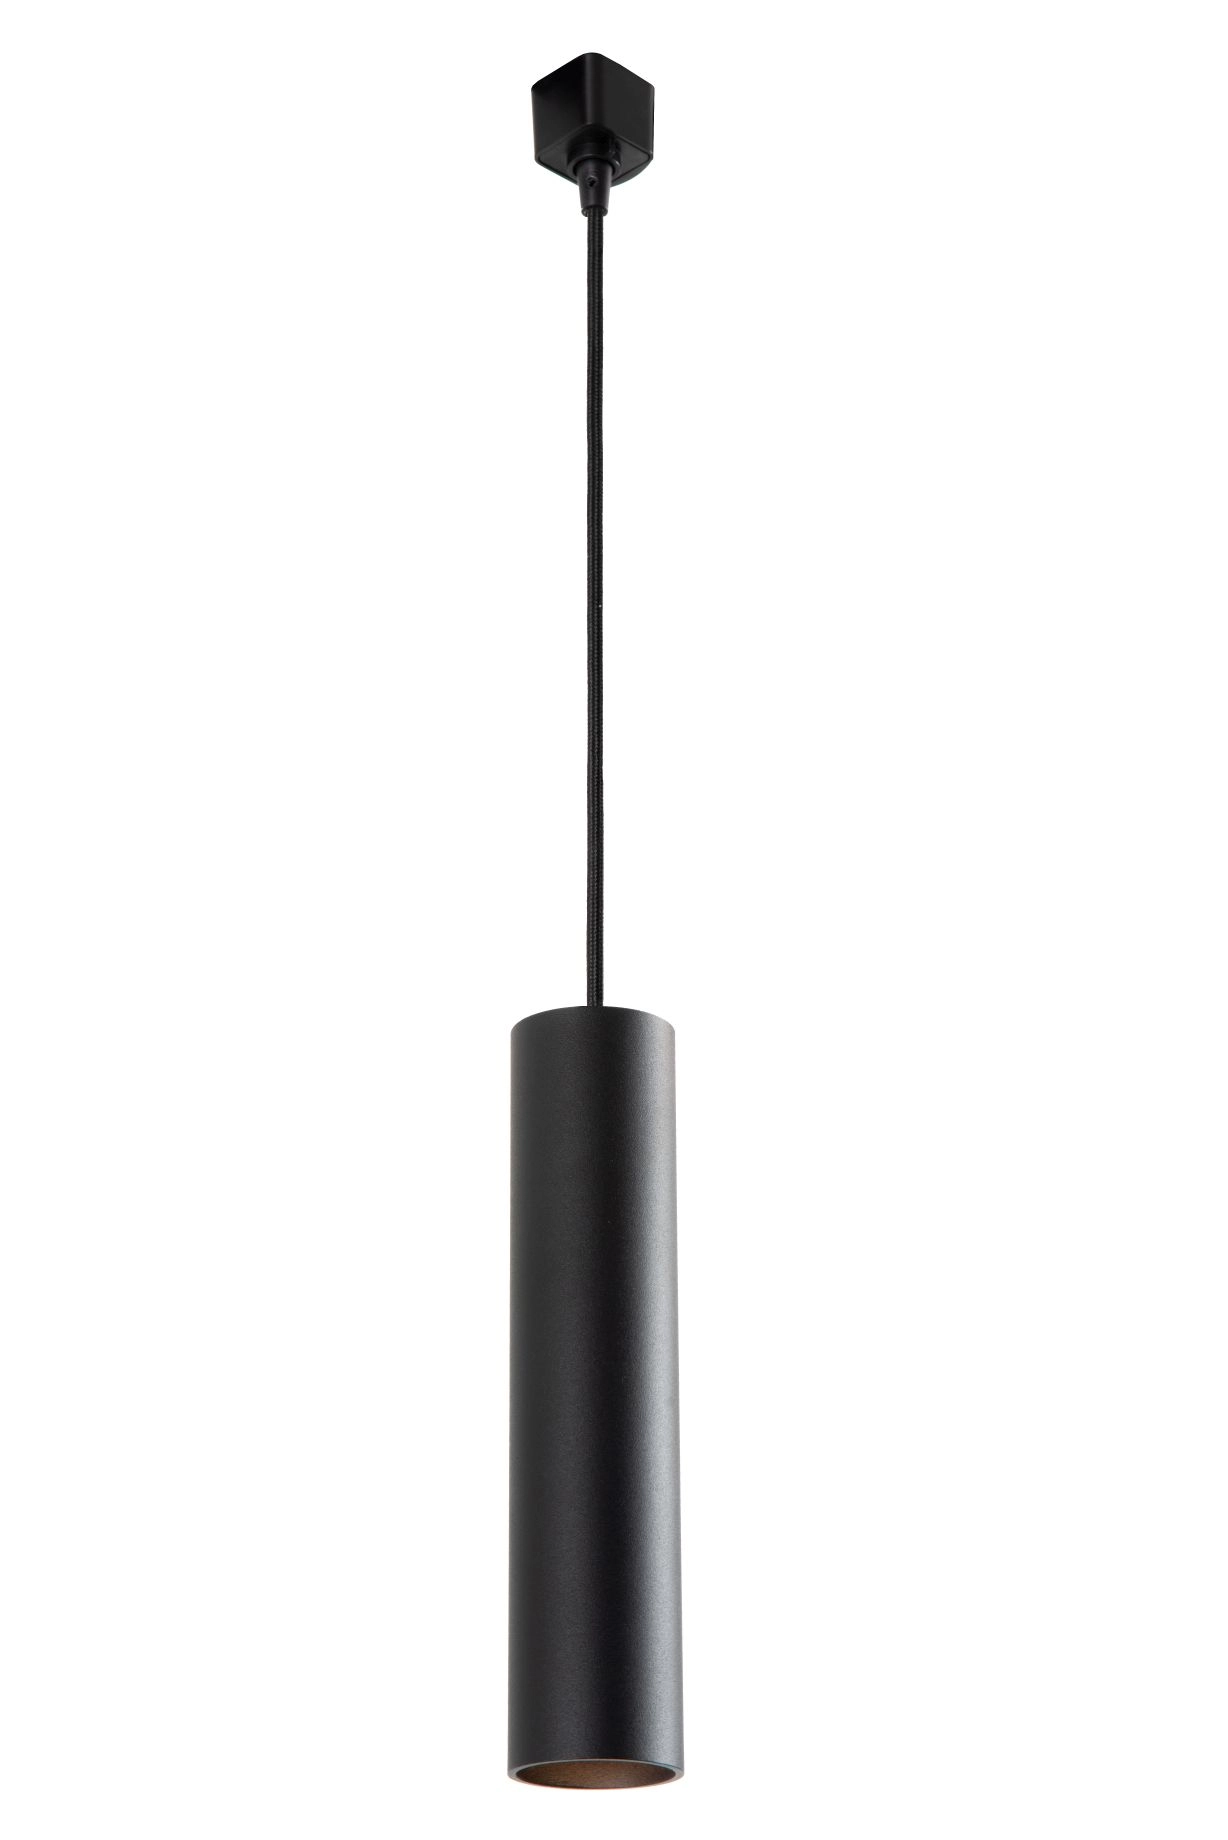 LU 09955/01/30 Lucide TRACK FLORIS pendant - 1-circuit Track lighting system - 1xGU10 - Black (Exten